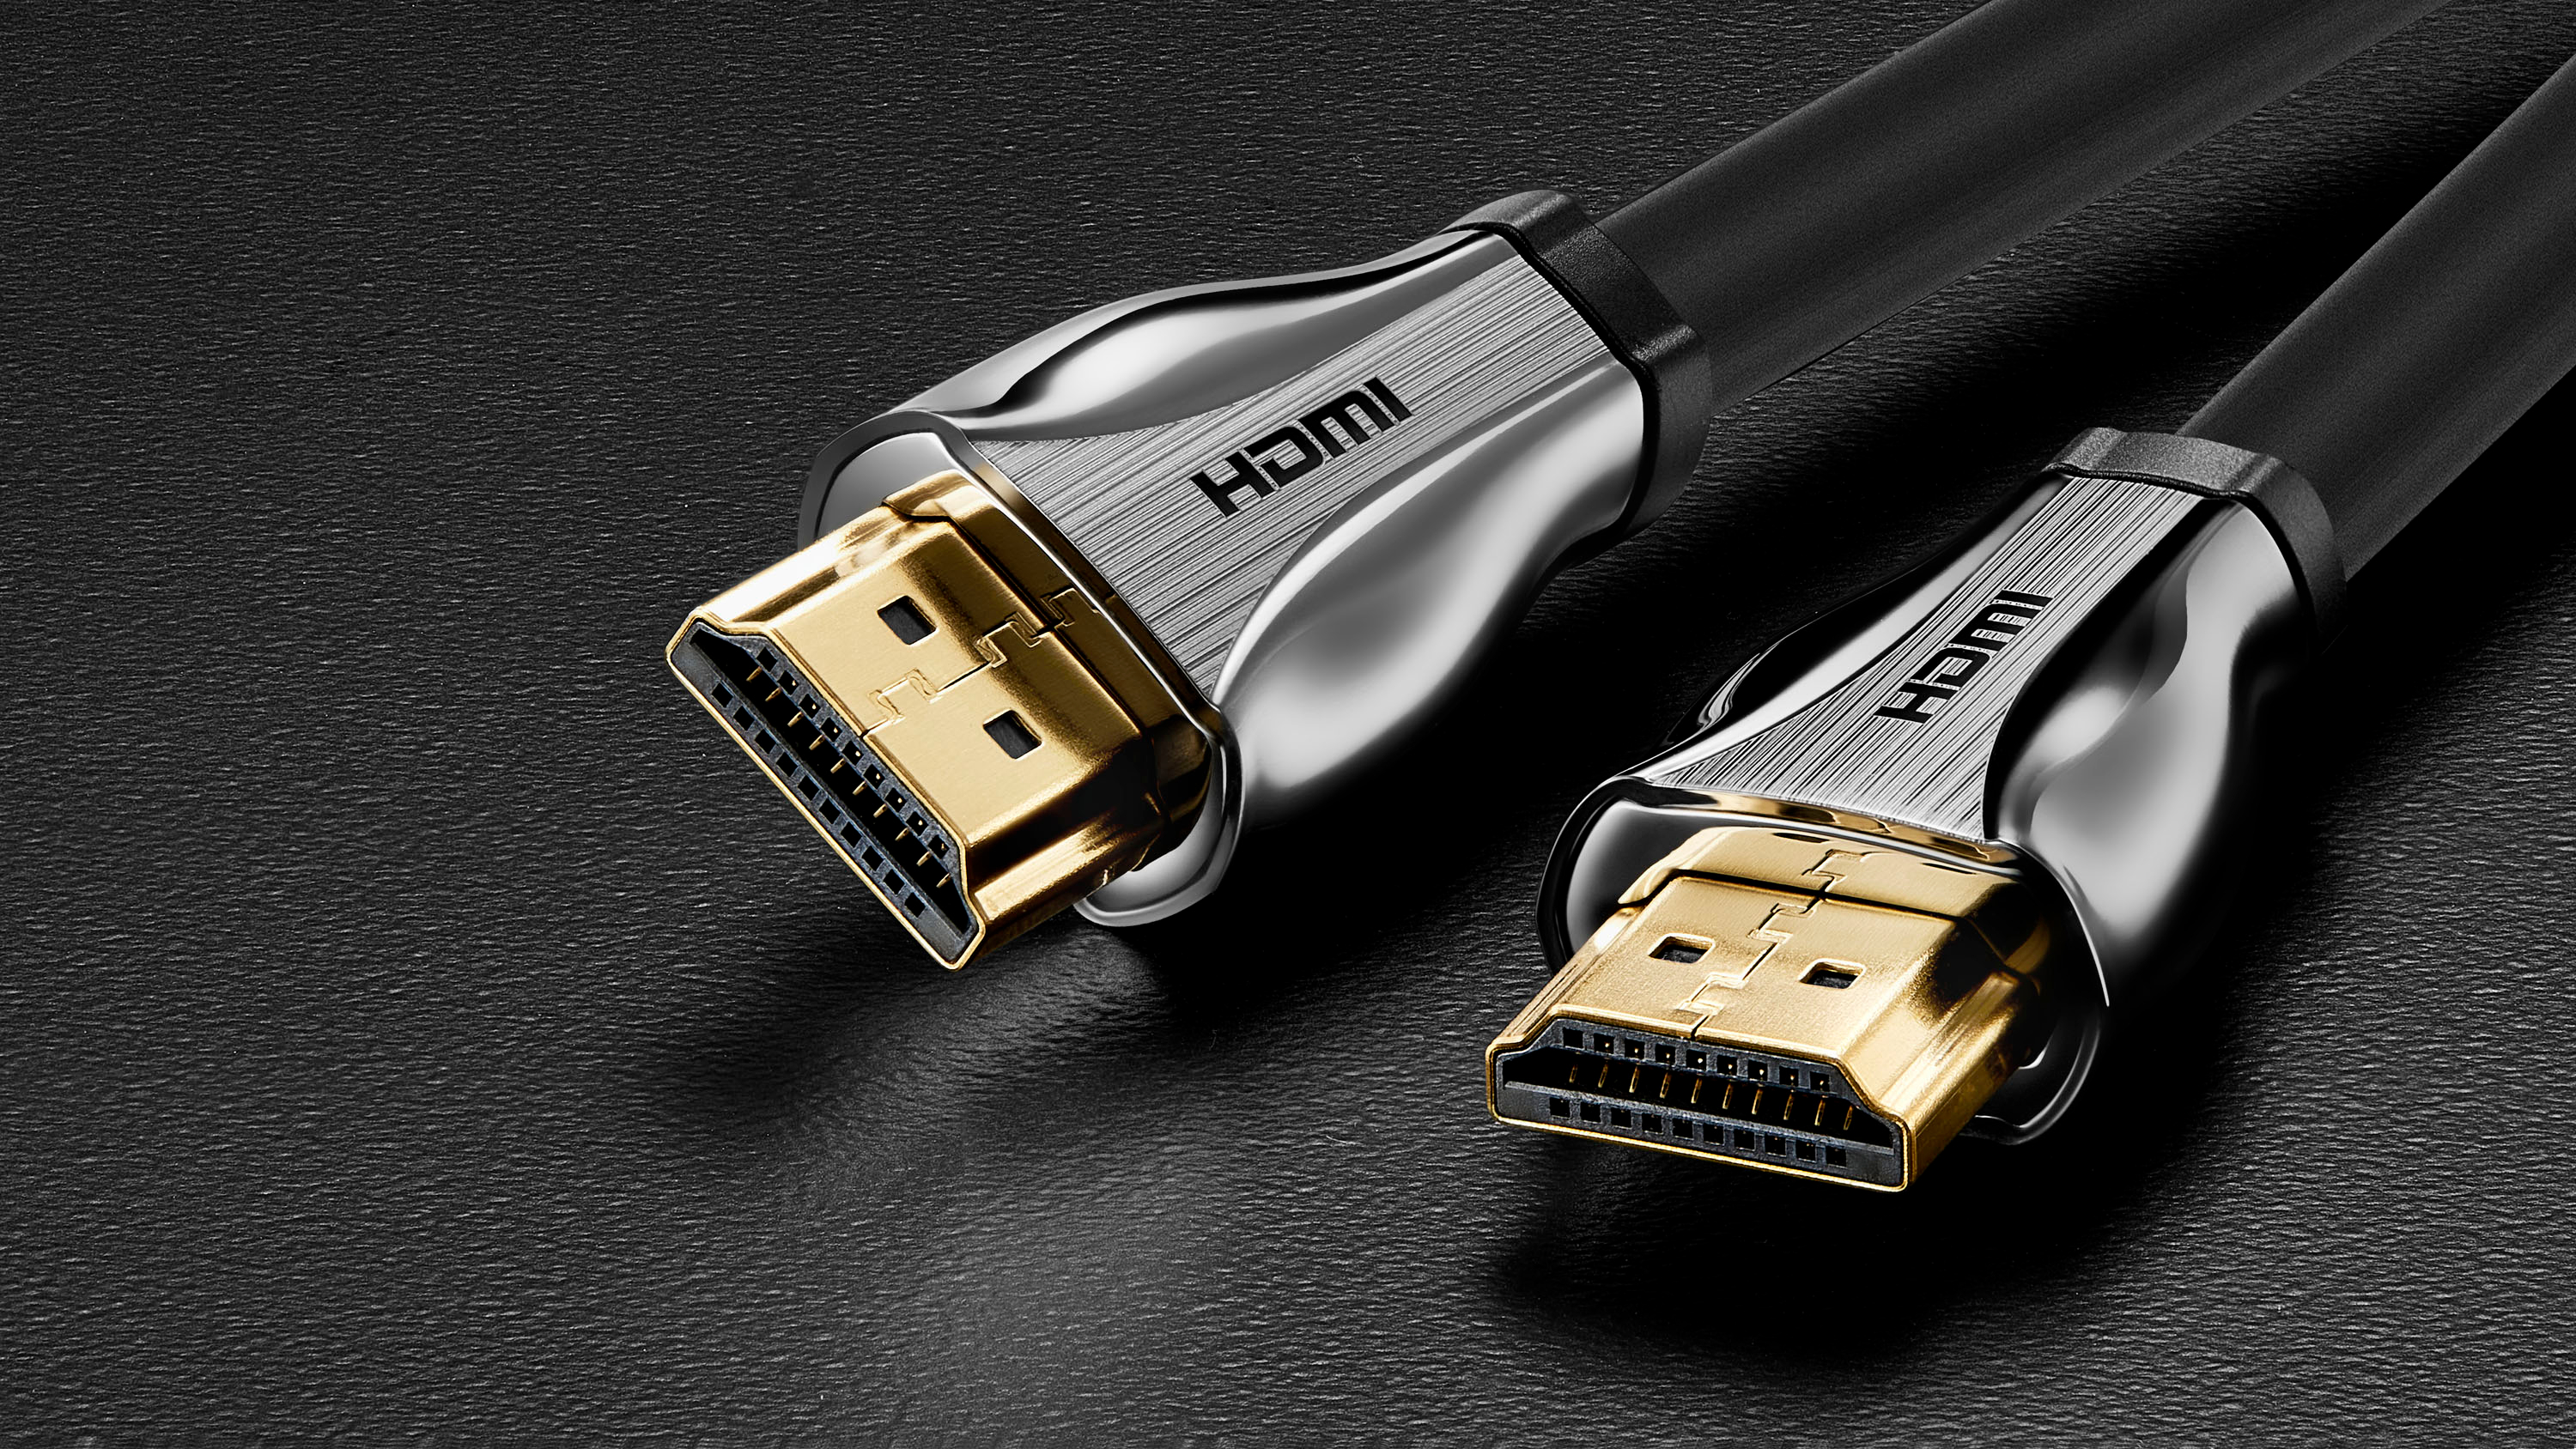 Rocketfish™ 4' 8K Ultra High Speed HDMI® 2.1 Certified Cable Black  RF-HG04N19 - Best Buy